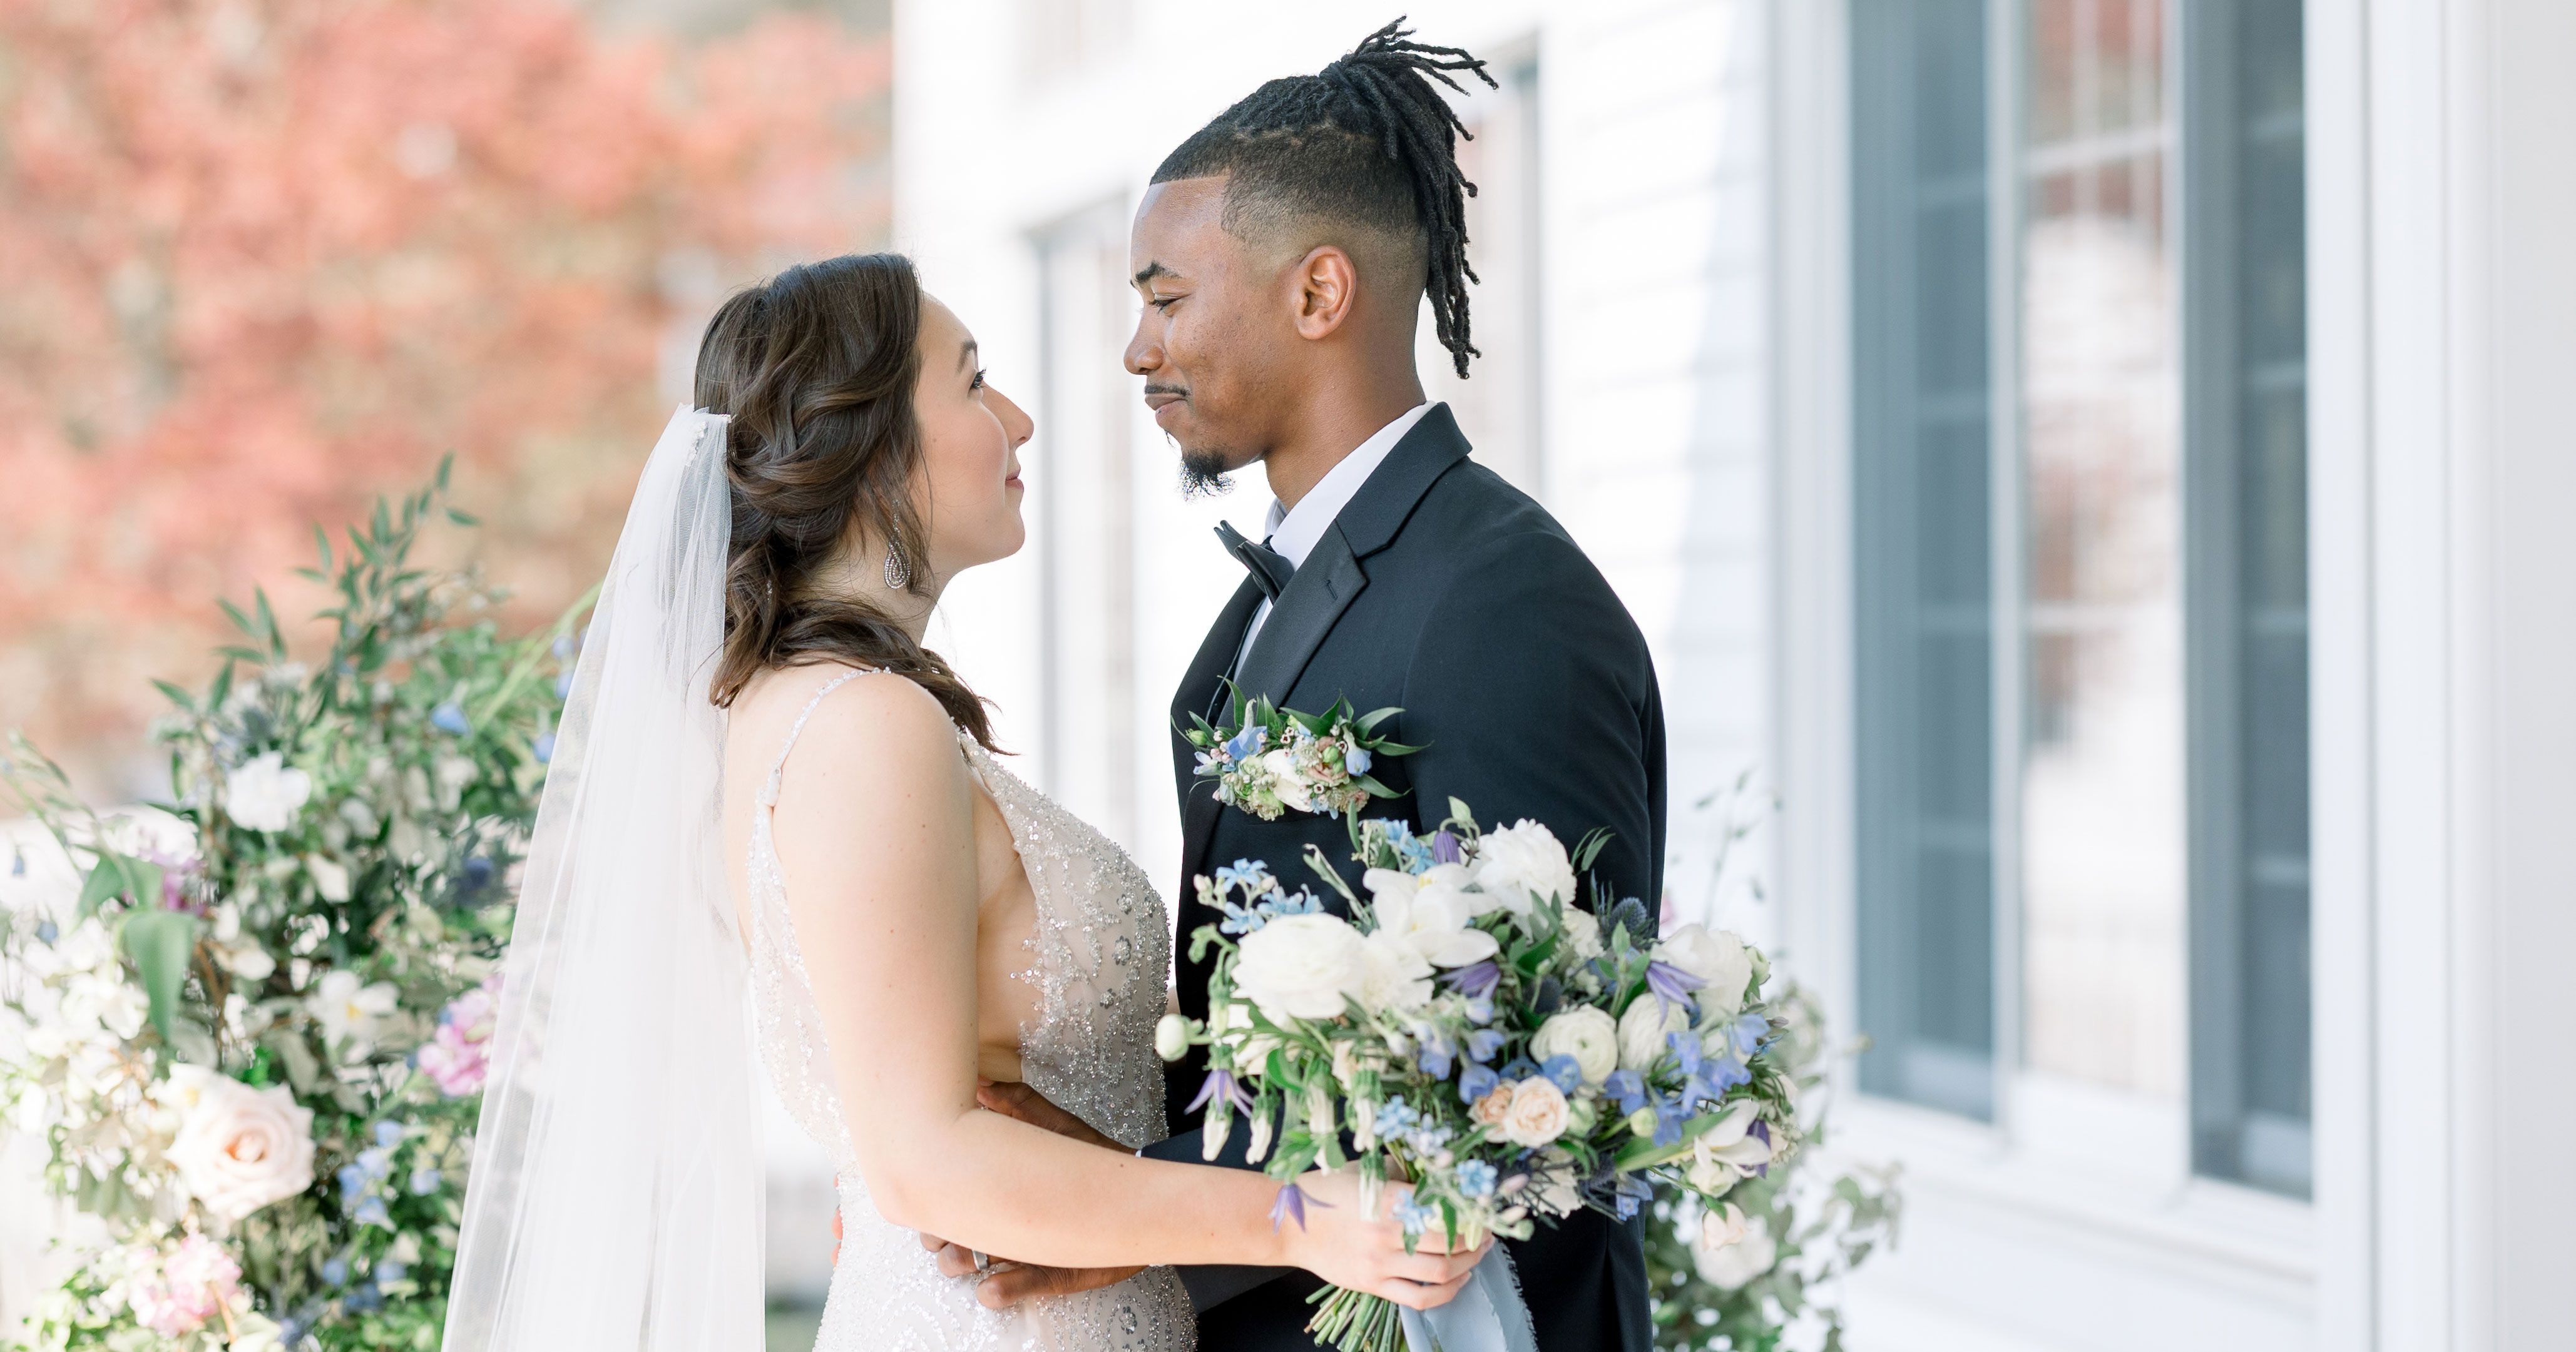 A Music-Inspired Micro Wedding in Michigan